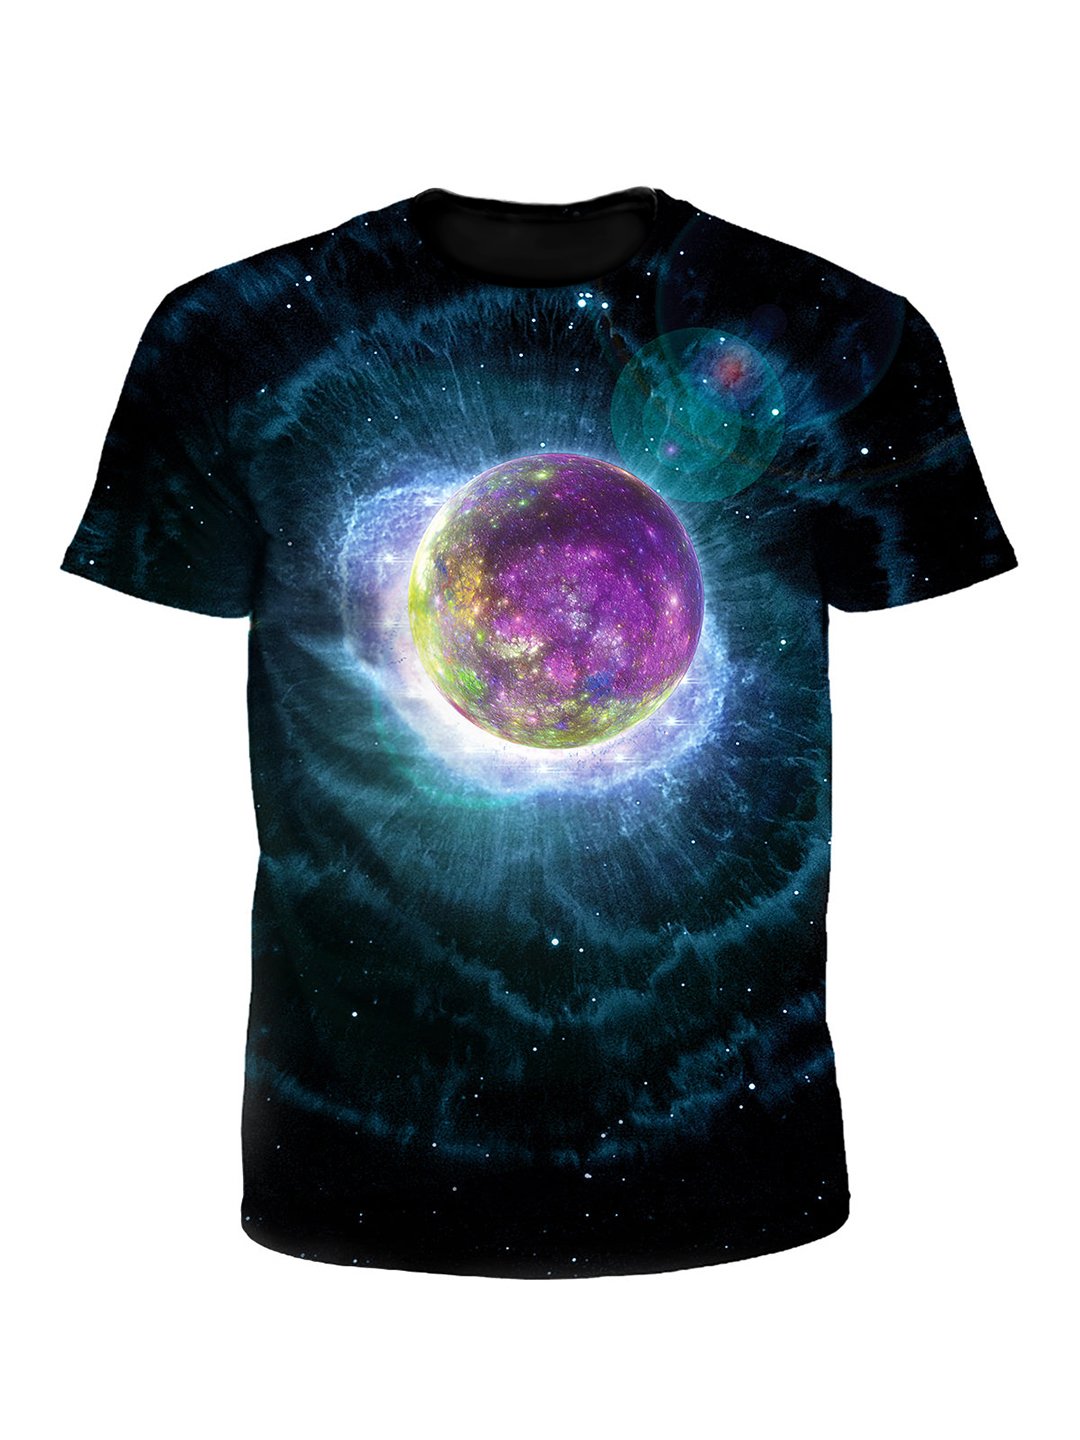 Emerge Nuclear Planet Galaxy Unisex T-Shirt - Boogie Threads